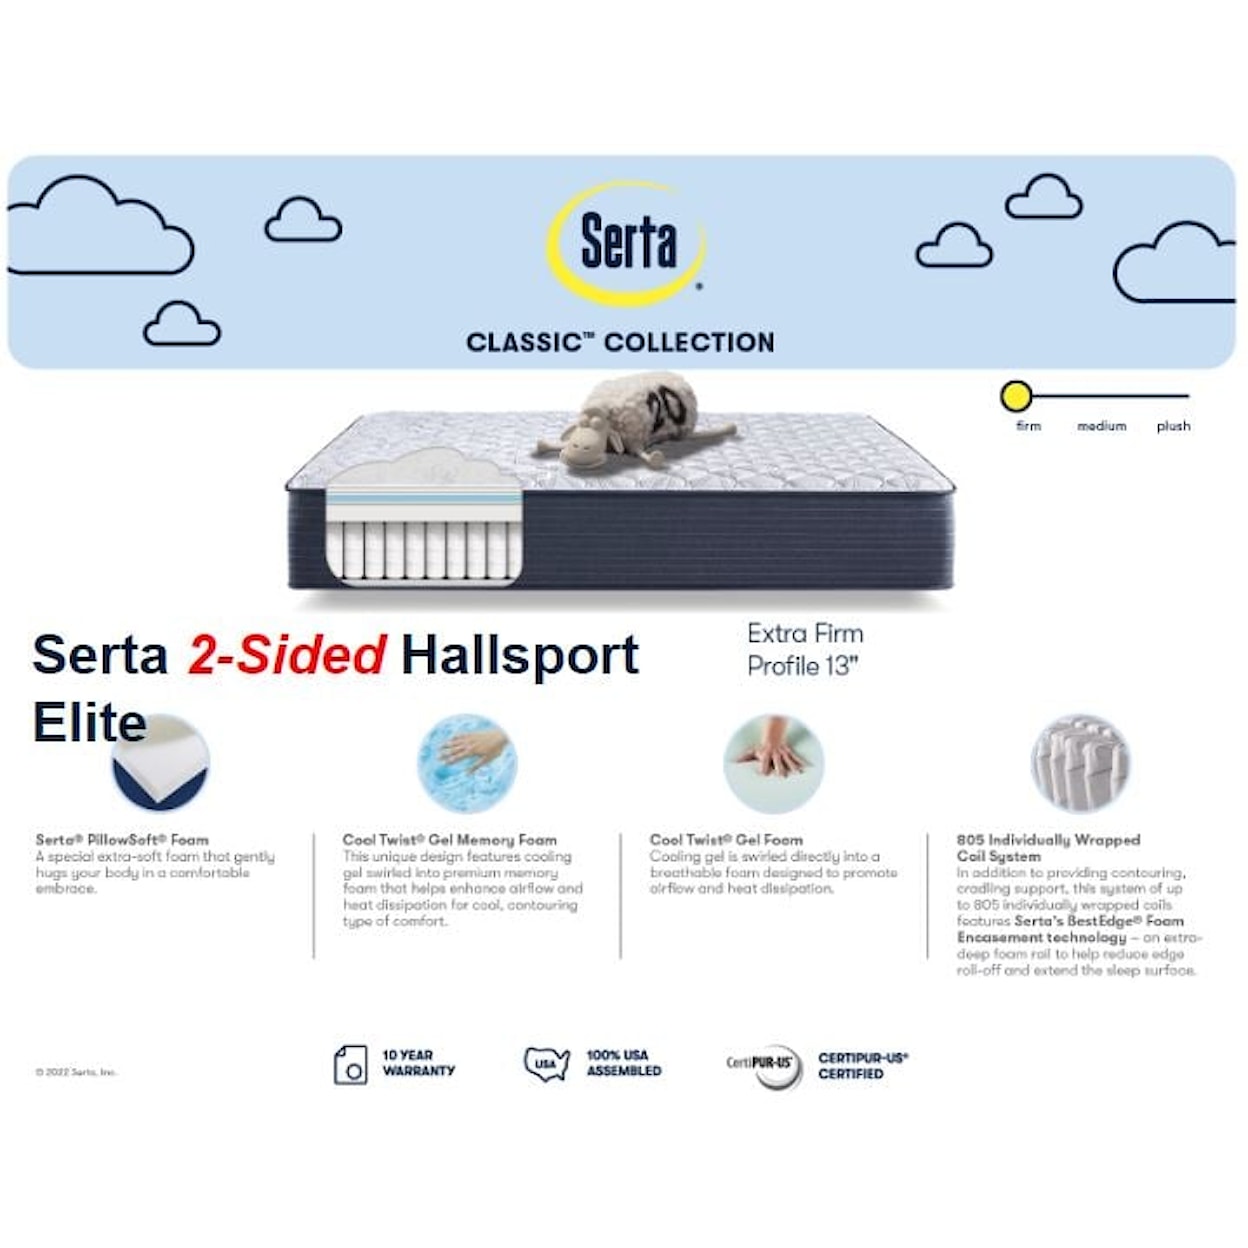 Serta Classic Hallsport Extra Firm